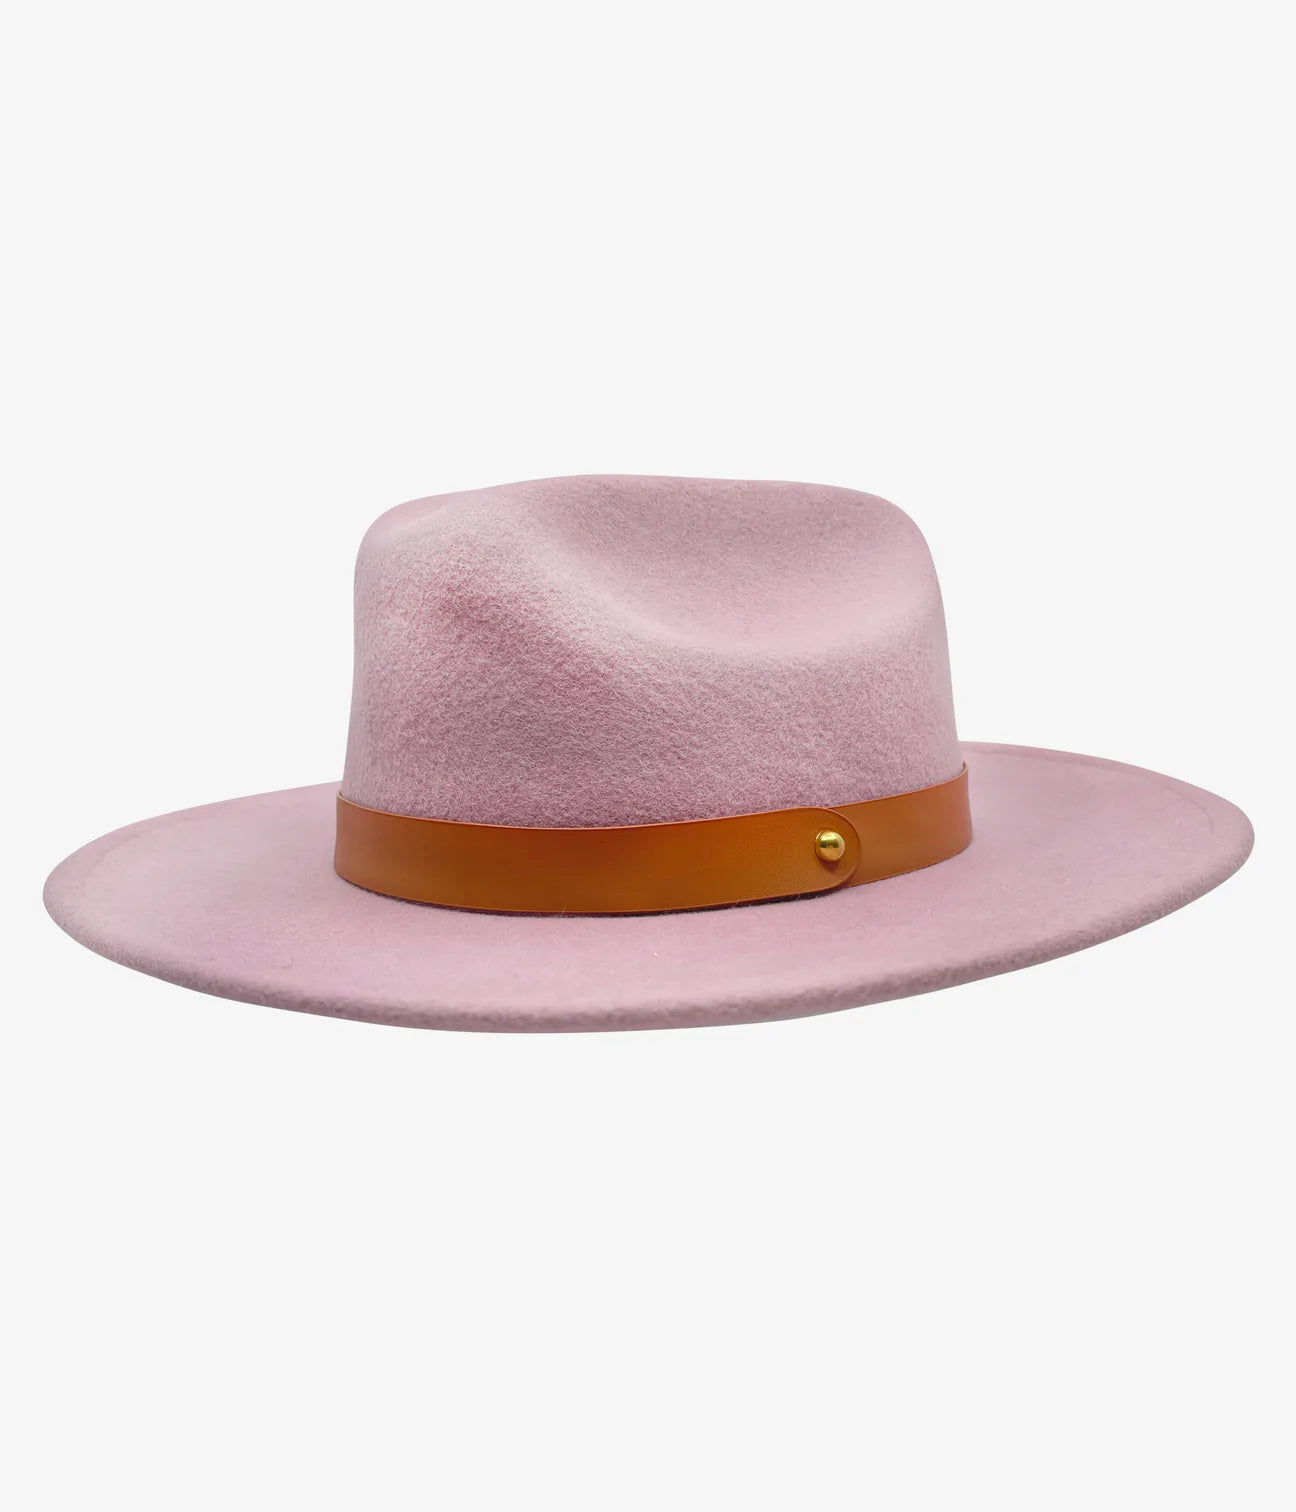 Hat - Topper Fedora Pink